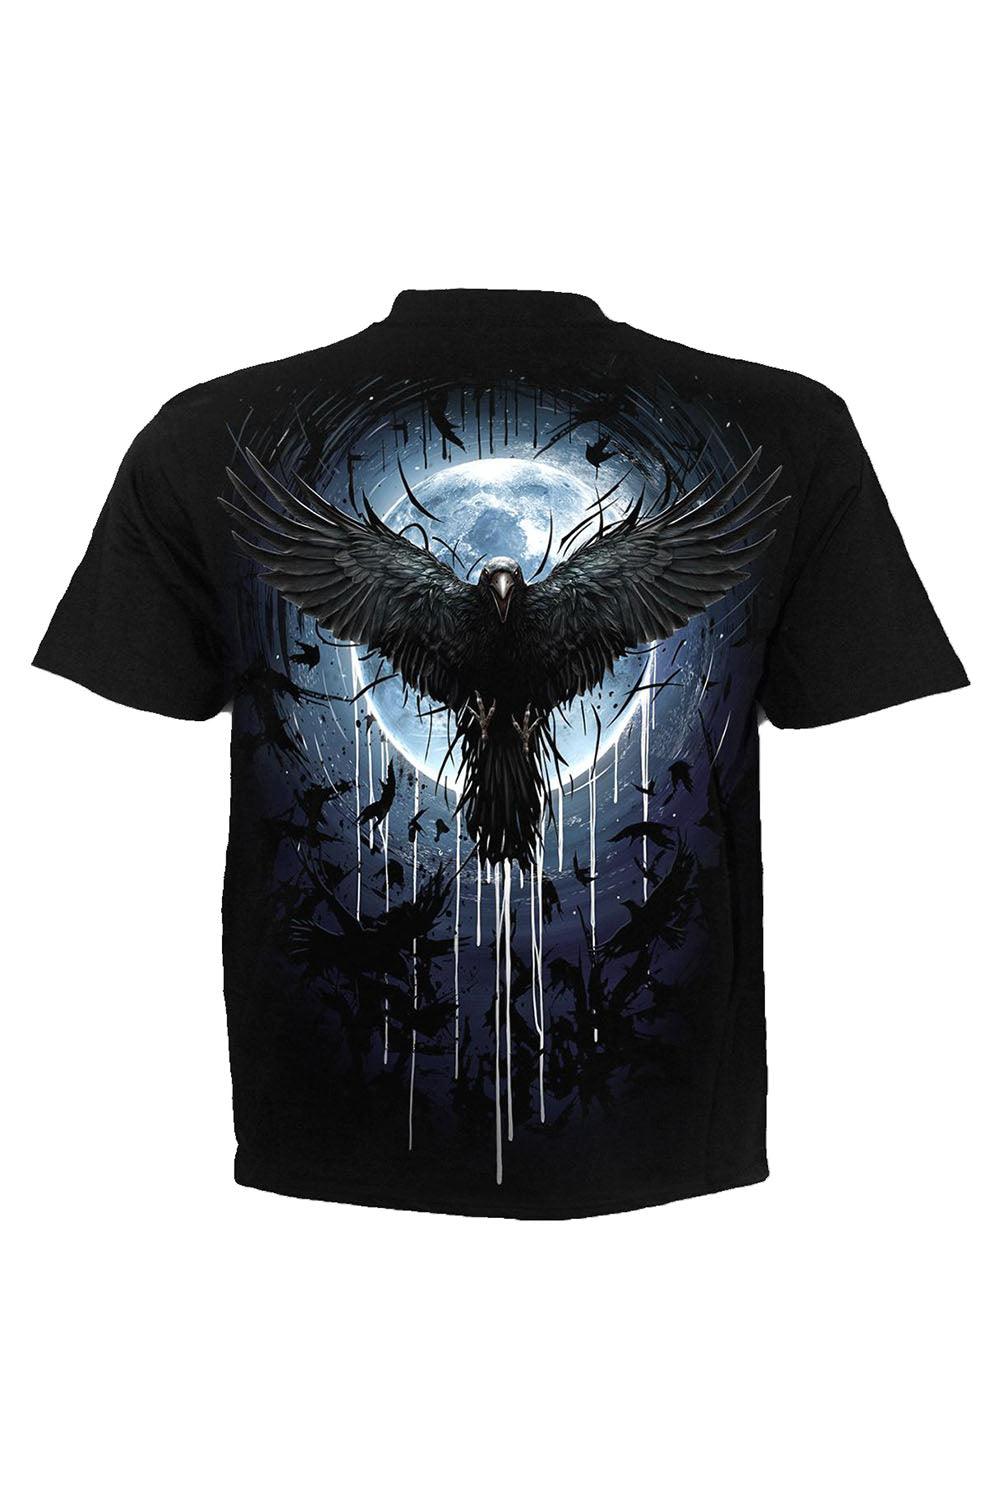 Spiral Crow Moon T-Shirt - VampireFreaks